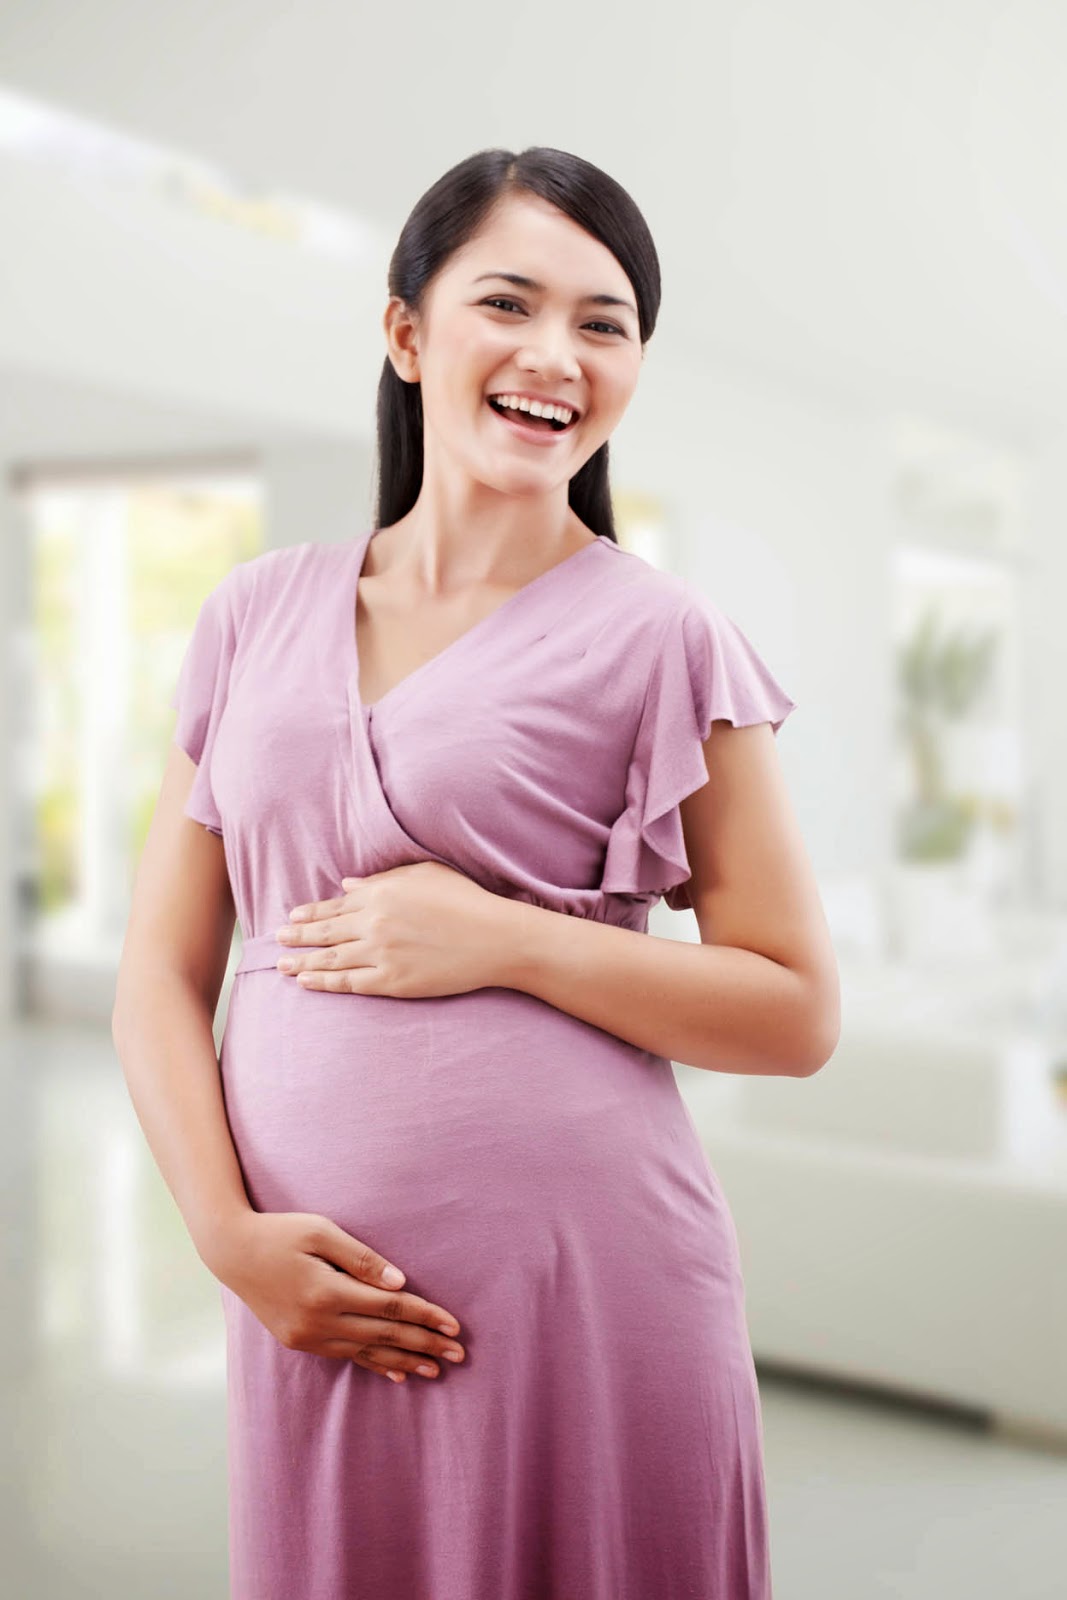 Pregnant Women Benefits 121